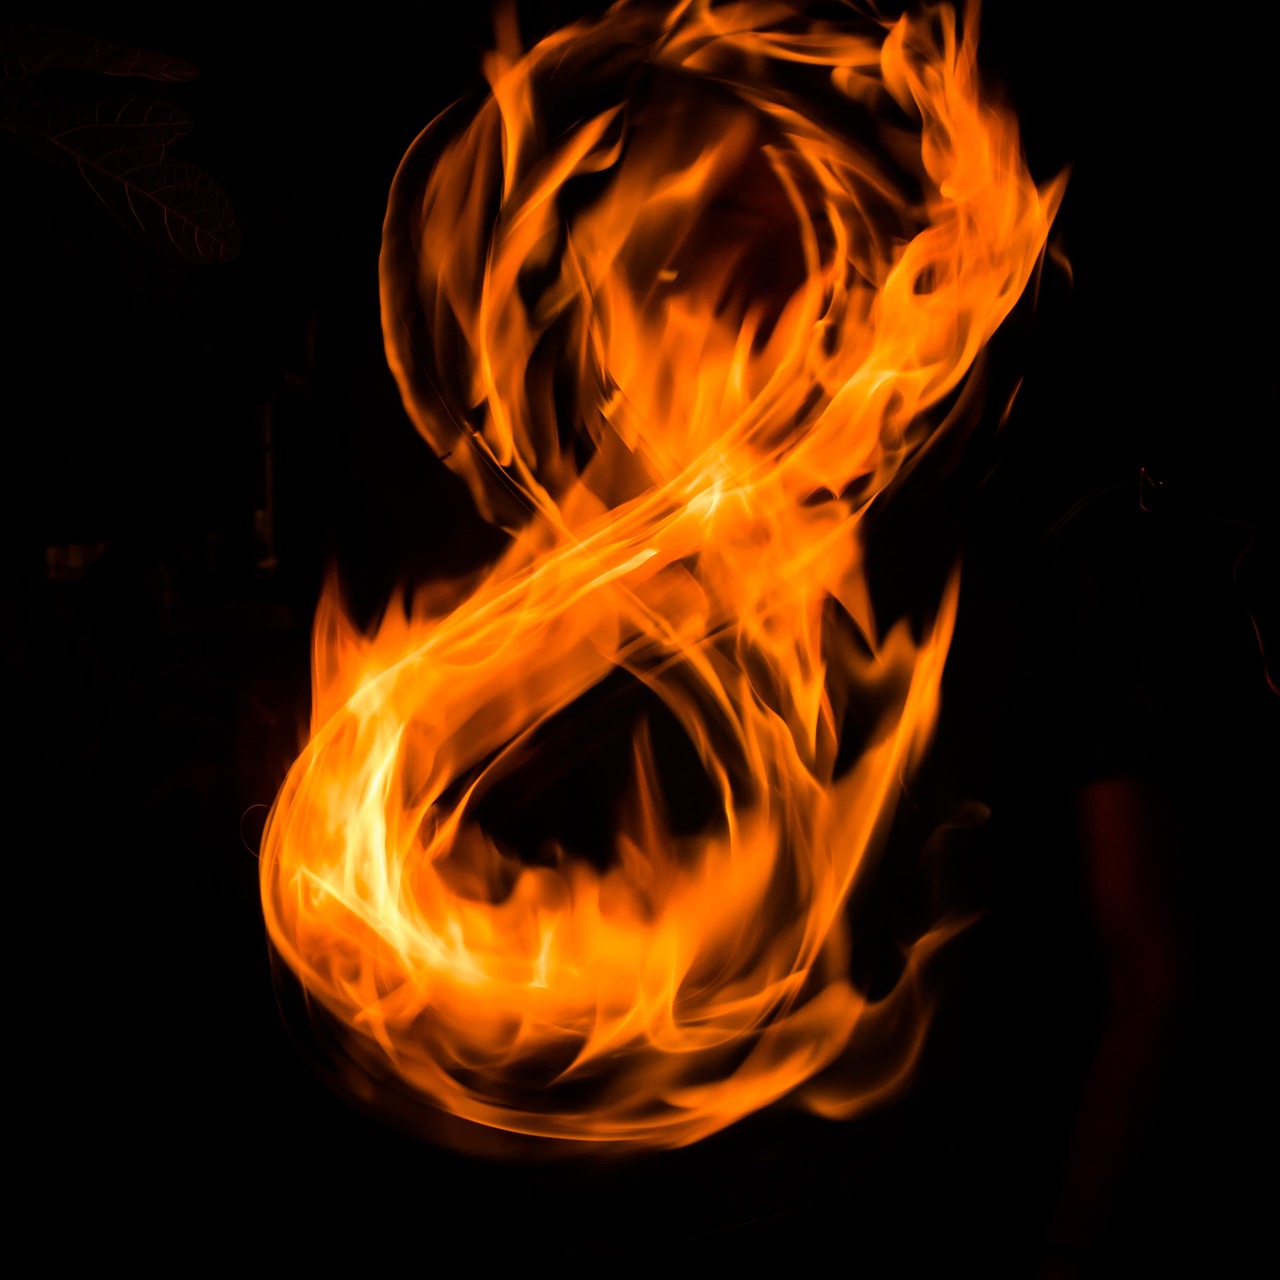 fire flame heat free photo